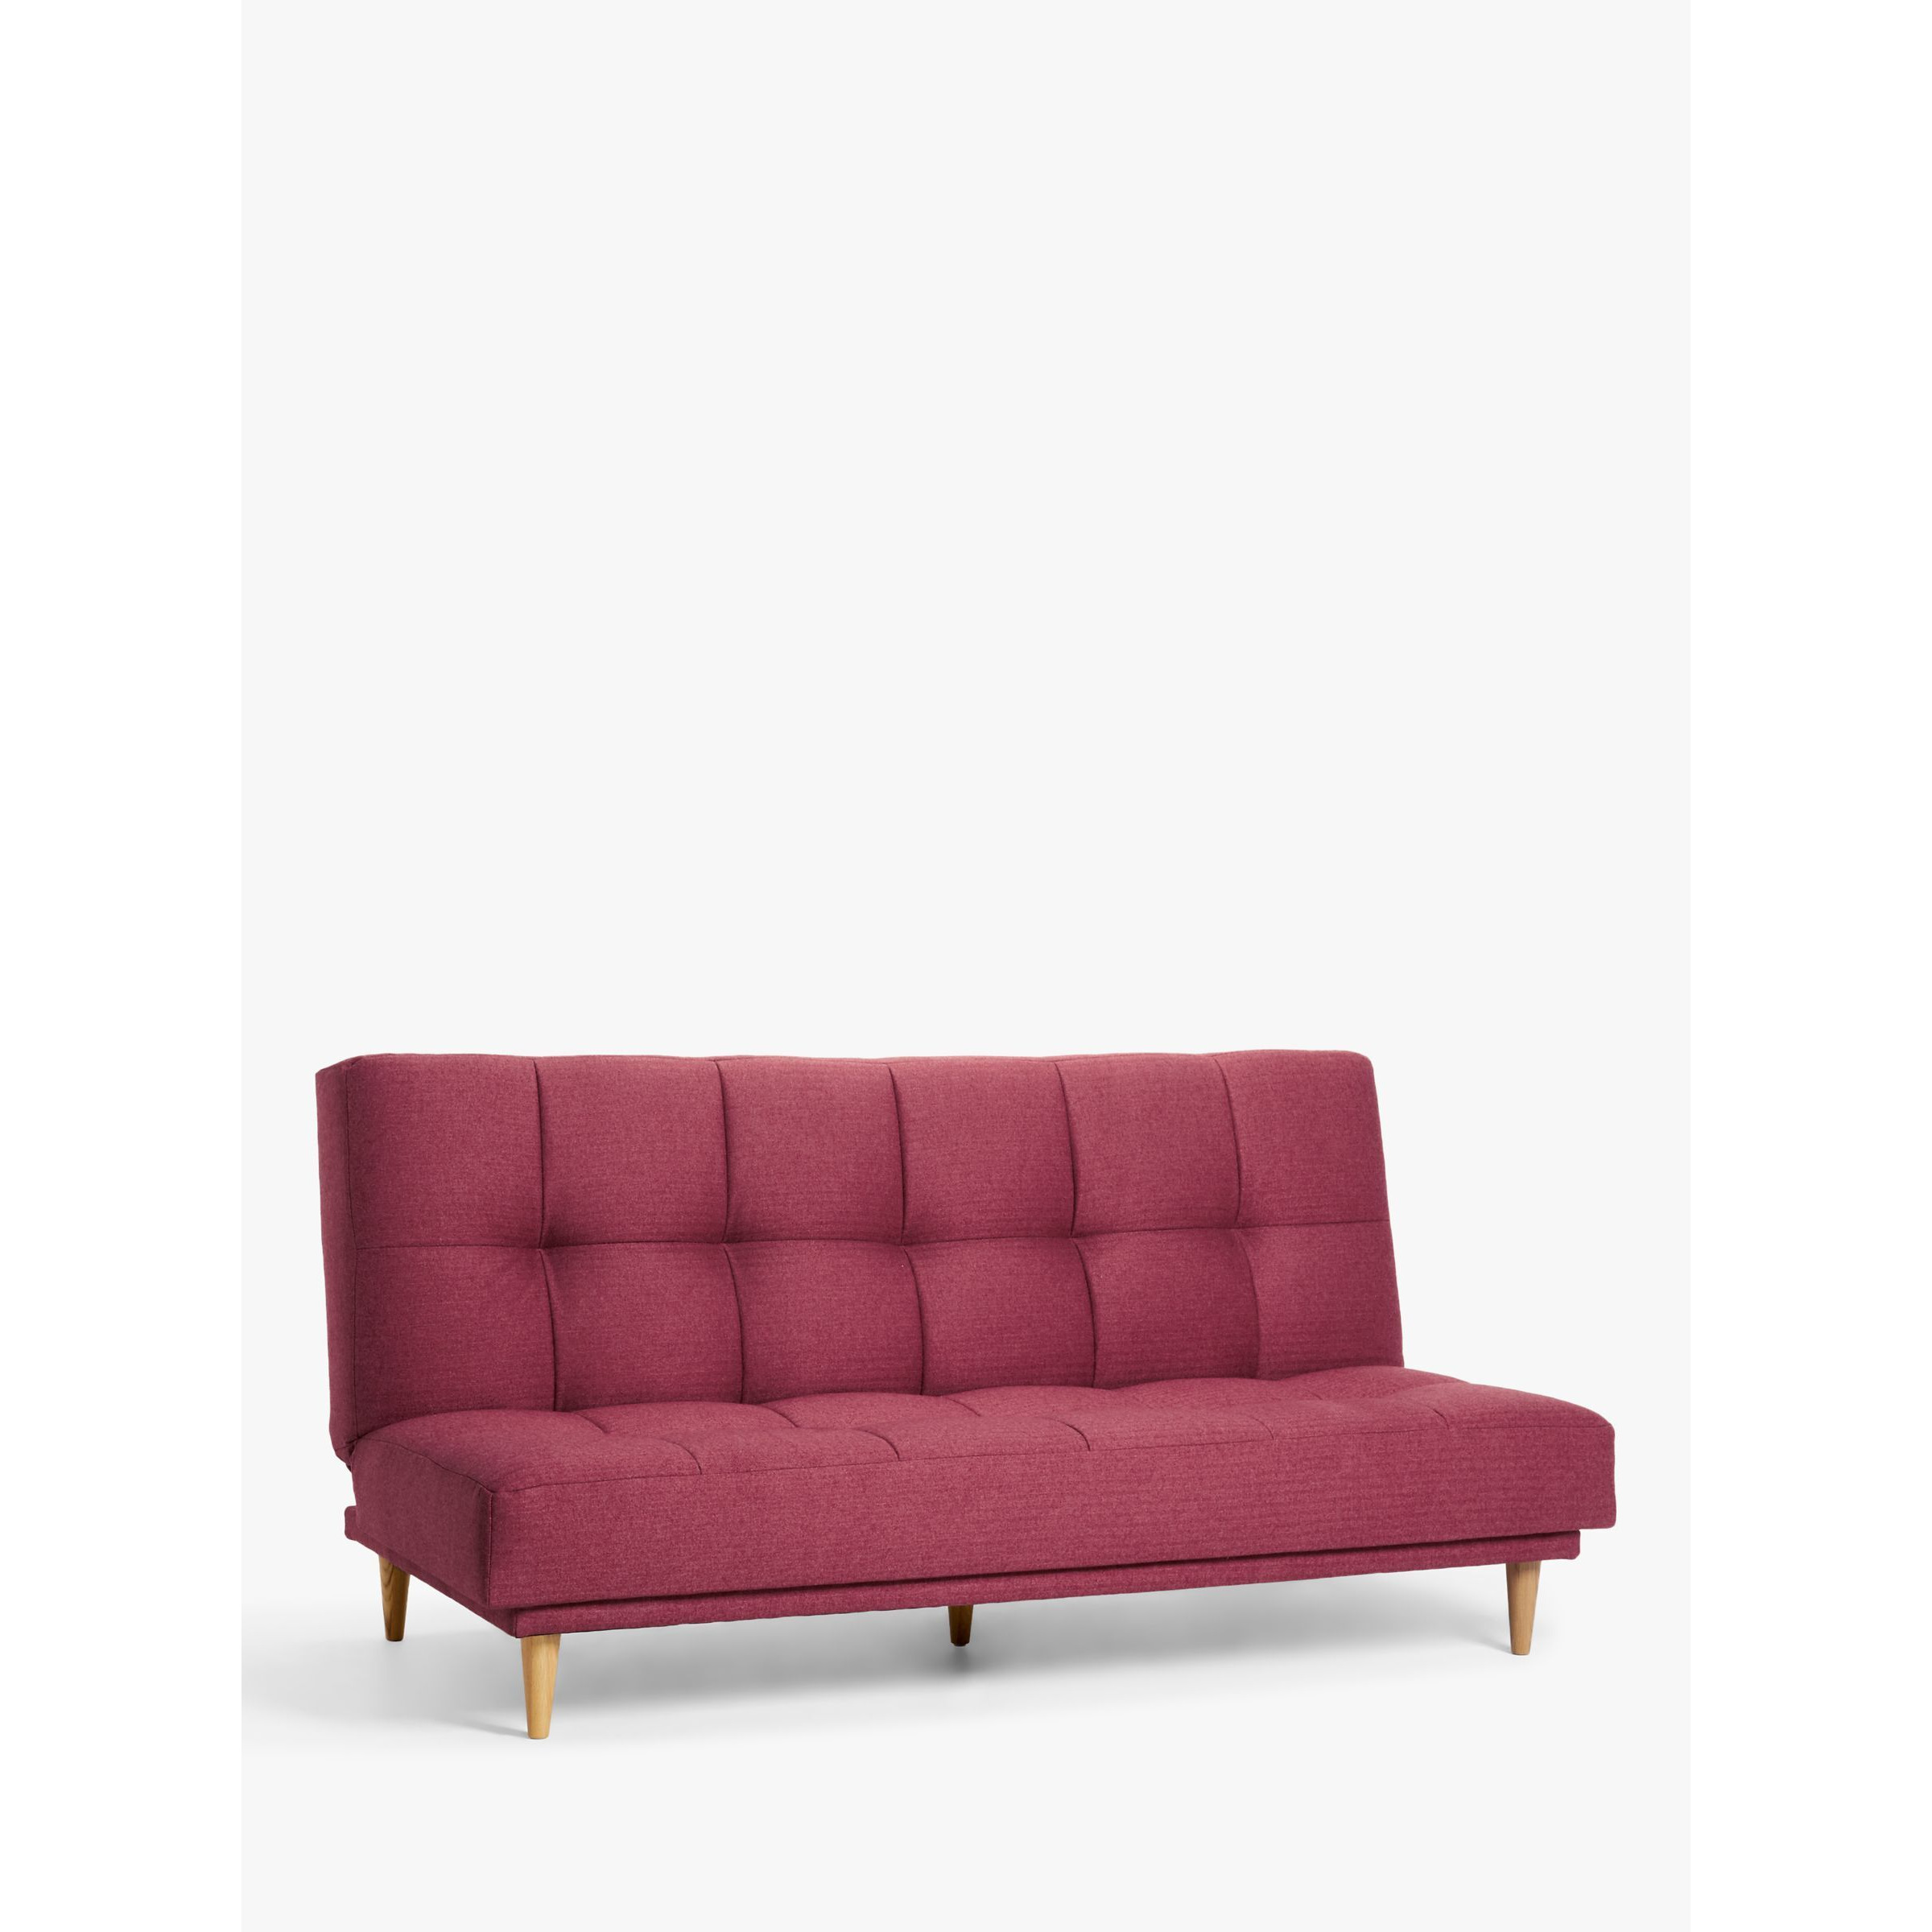 John Lewis Linear Medium 2 Seater Sofa Bed, Light Leg - image 1